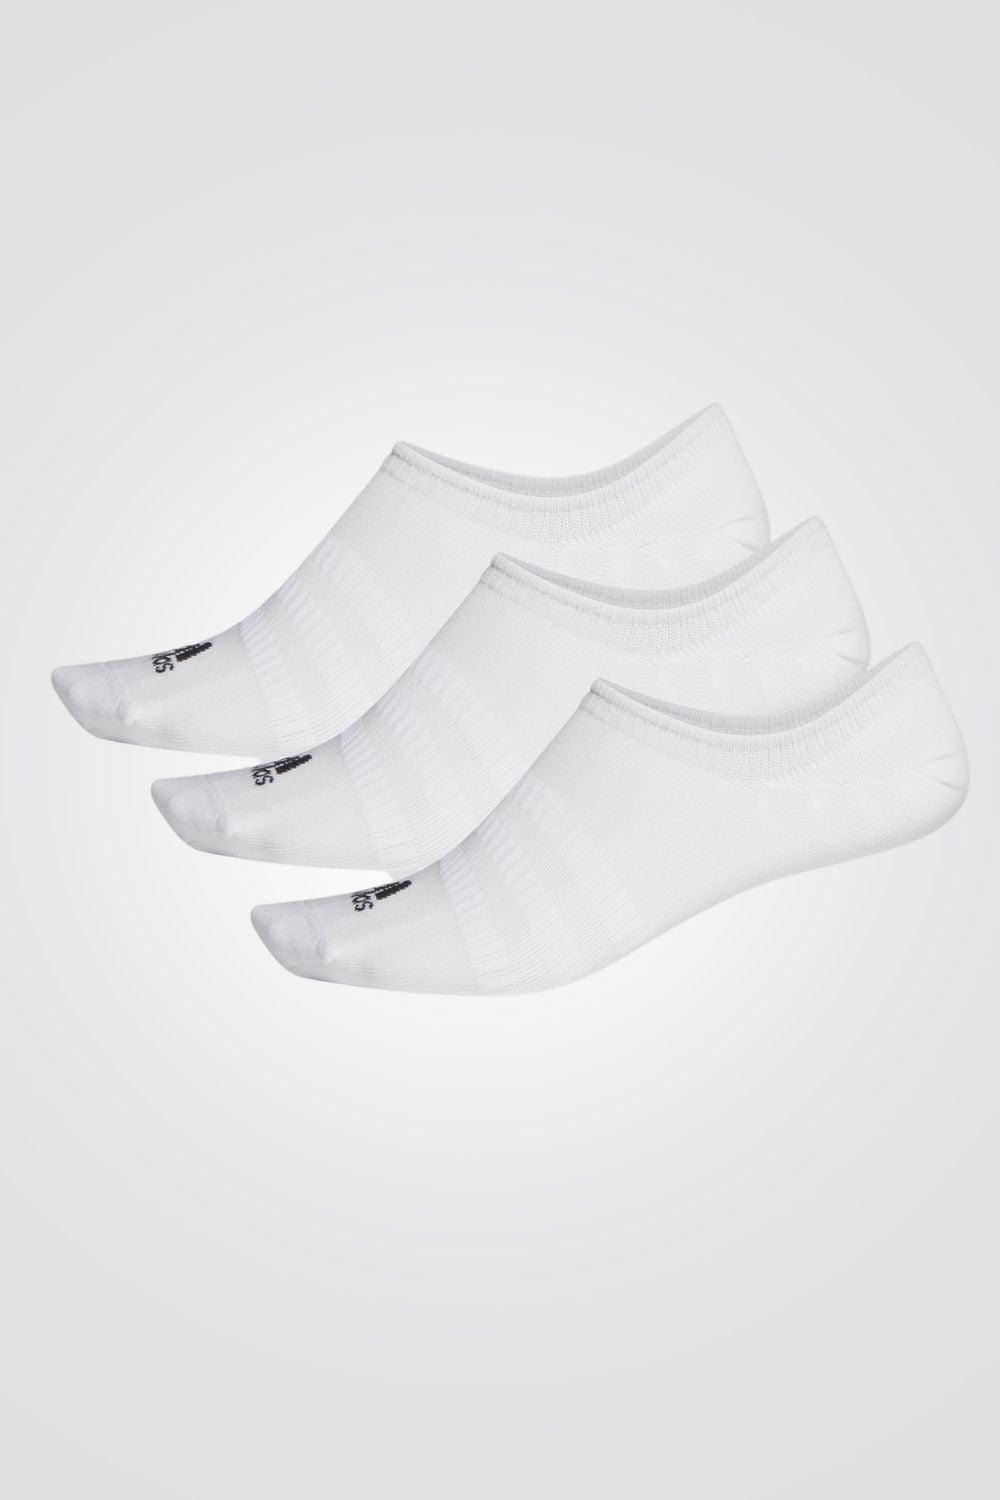 ADIDAS - סט 3 גרביים בצבע לבן - MASHBIR//365